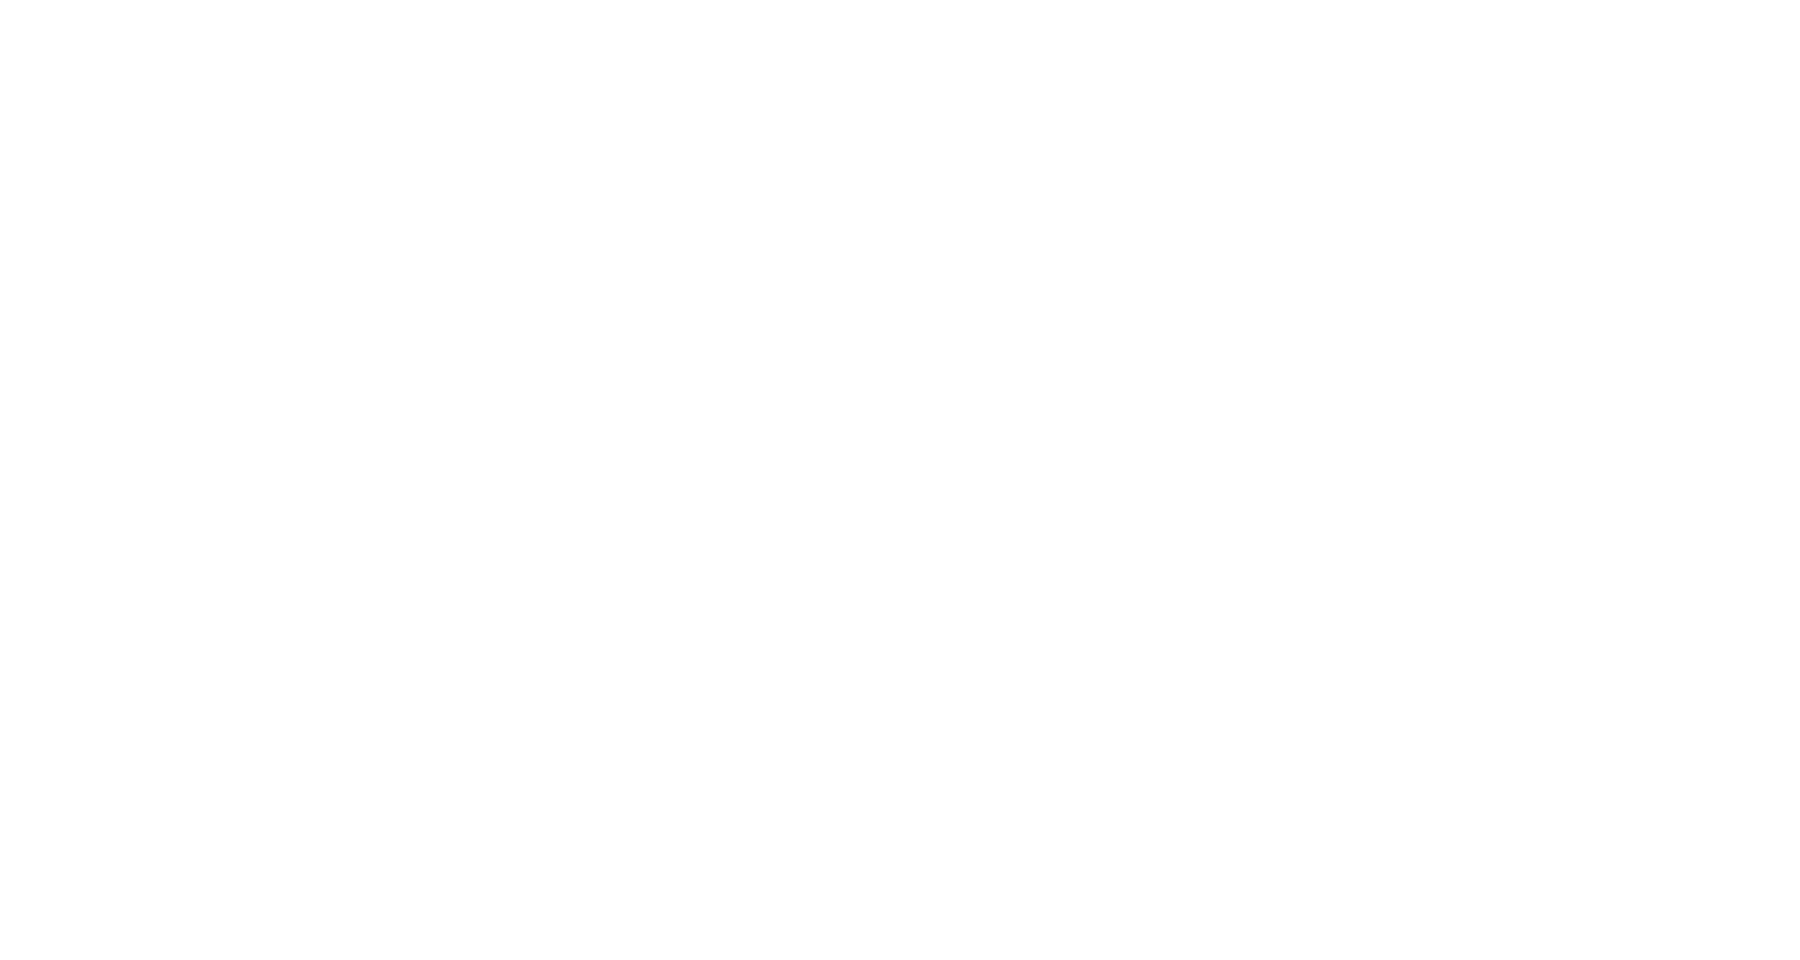 Immanuel Church, Gallatin TN logo stacked- an intergenerational, gospel-centered church outside of Nashville